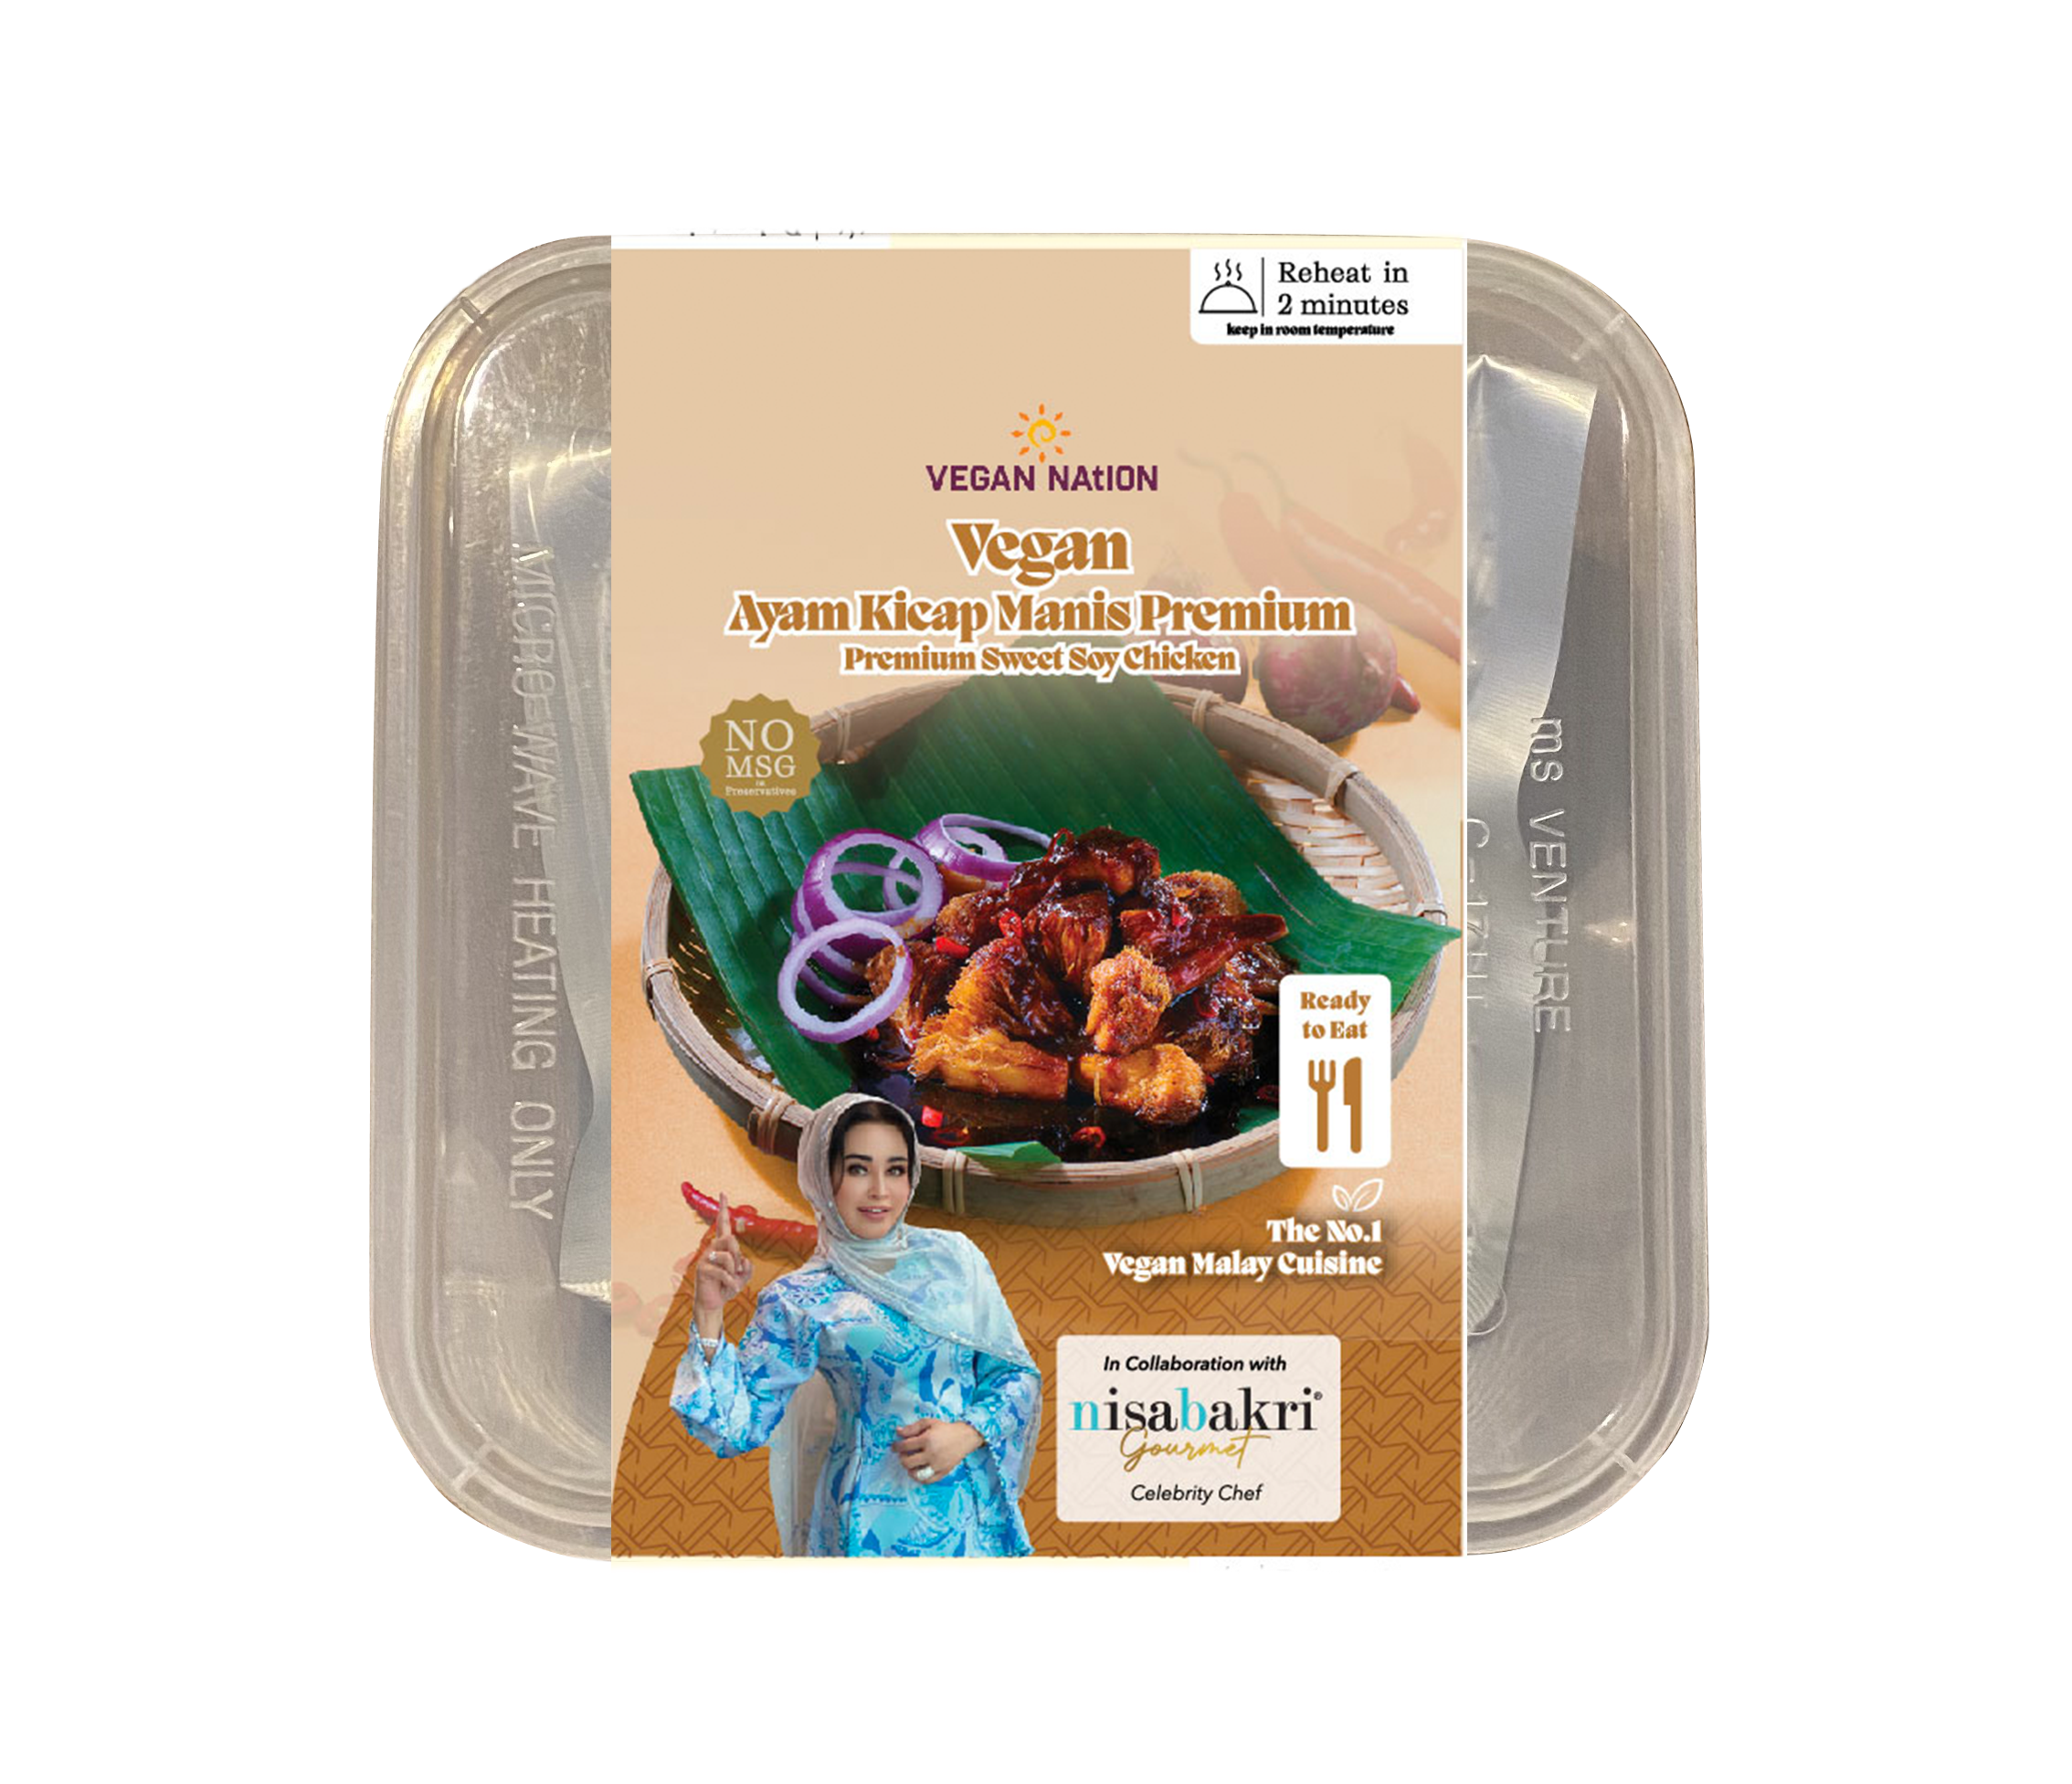 Vegan Nation - Vegan Ayam Kicap Manis Premium (150g)